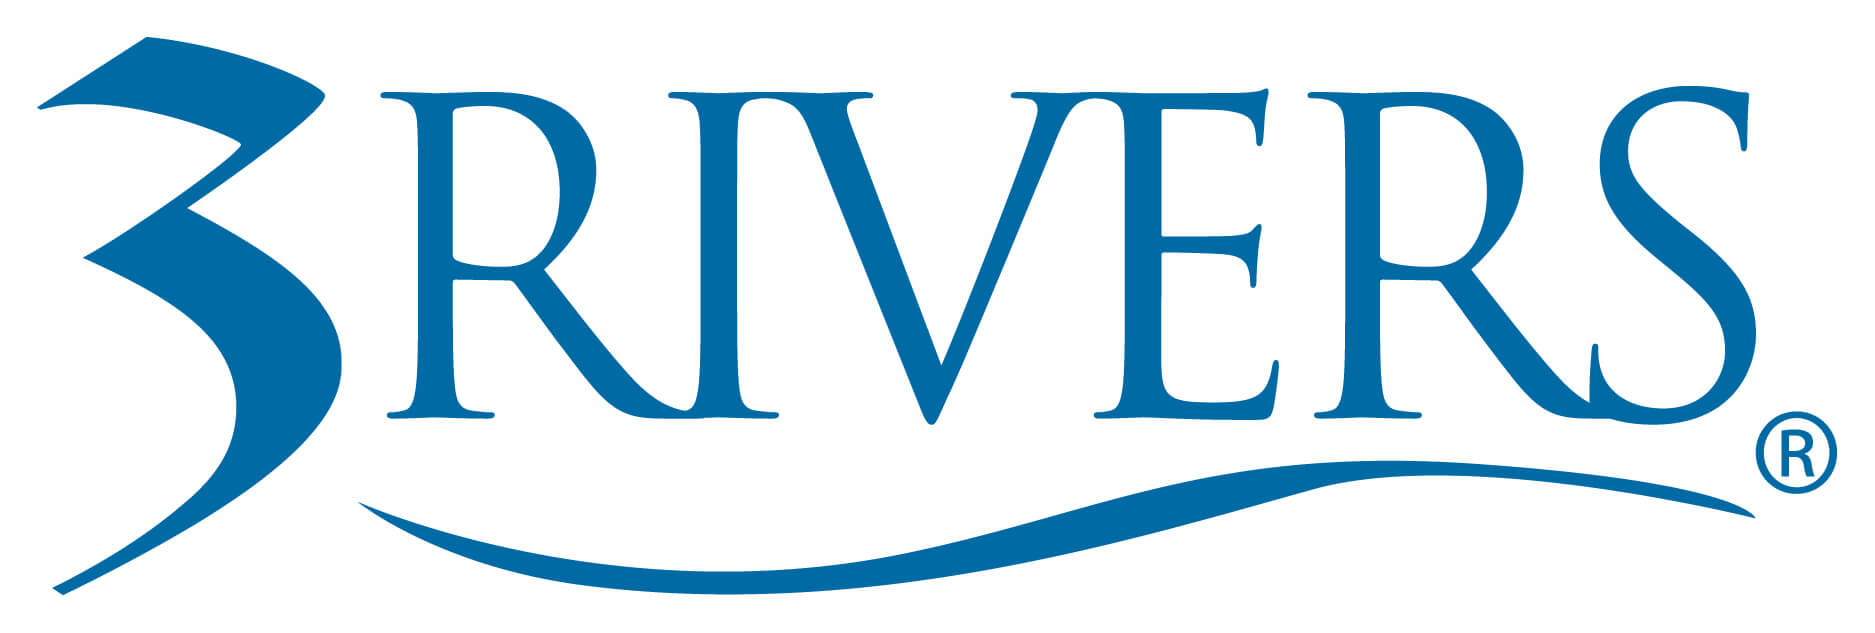 3rivers credit union logo